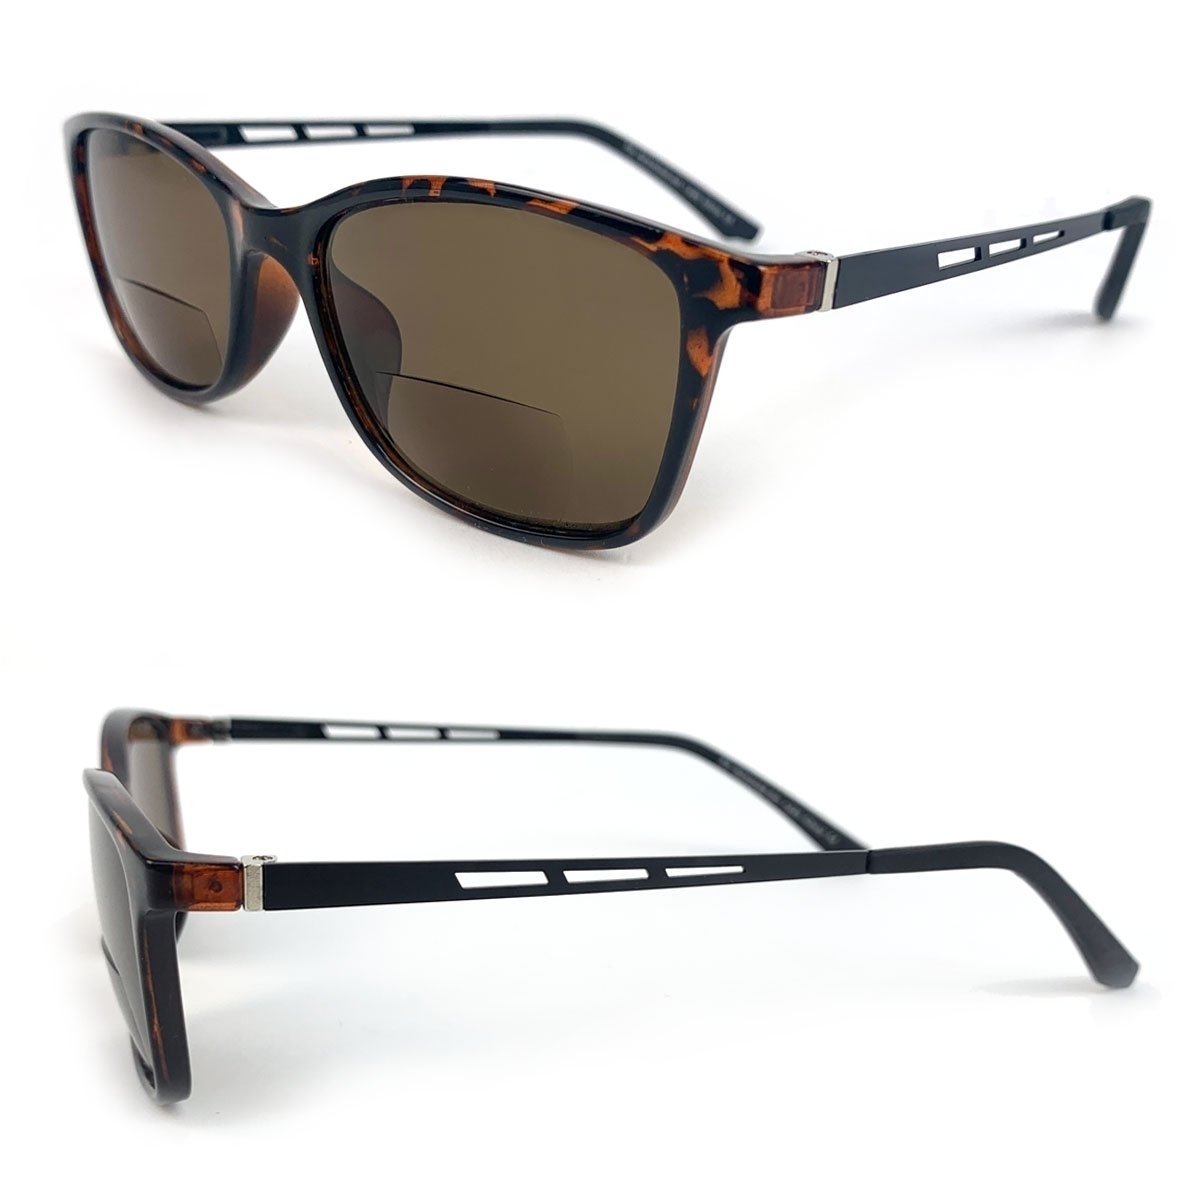 Bifocal Sun Readers Classic Frame Geek Retro Style Reading Sunglasses - Tortoise, +1.50